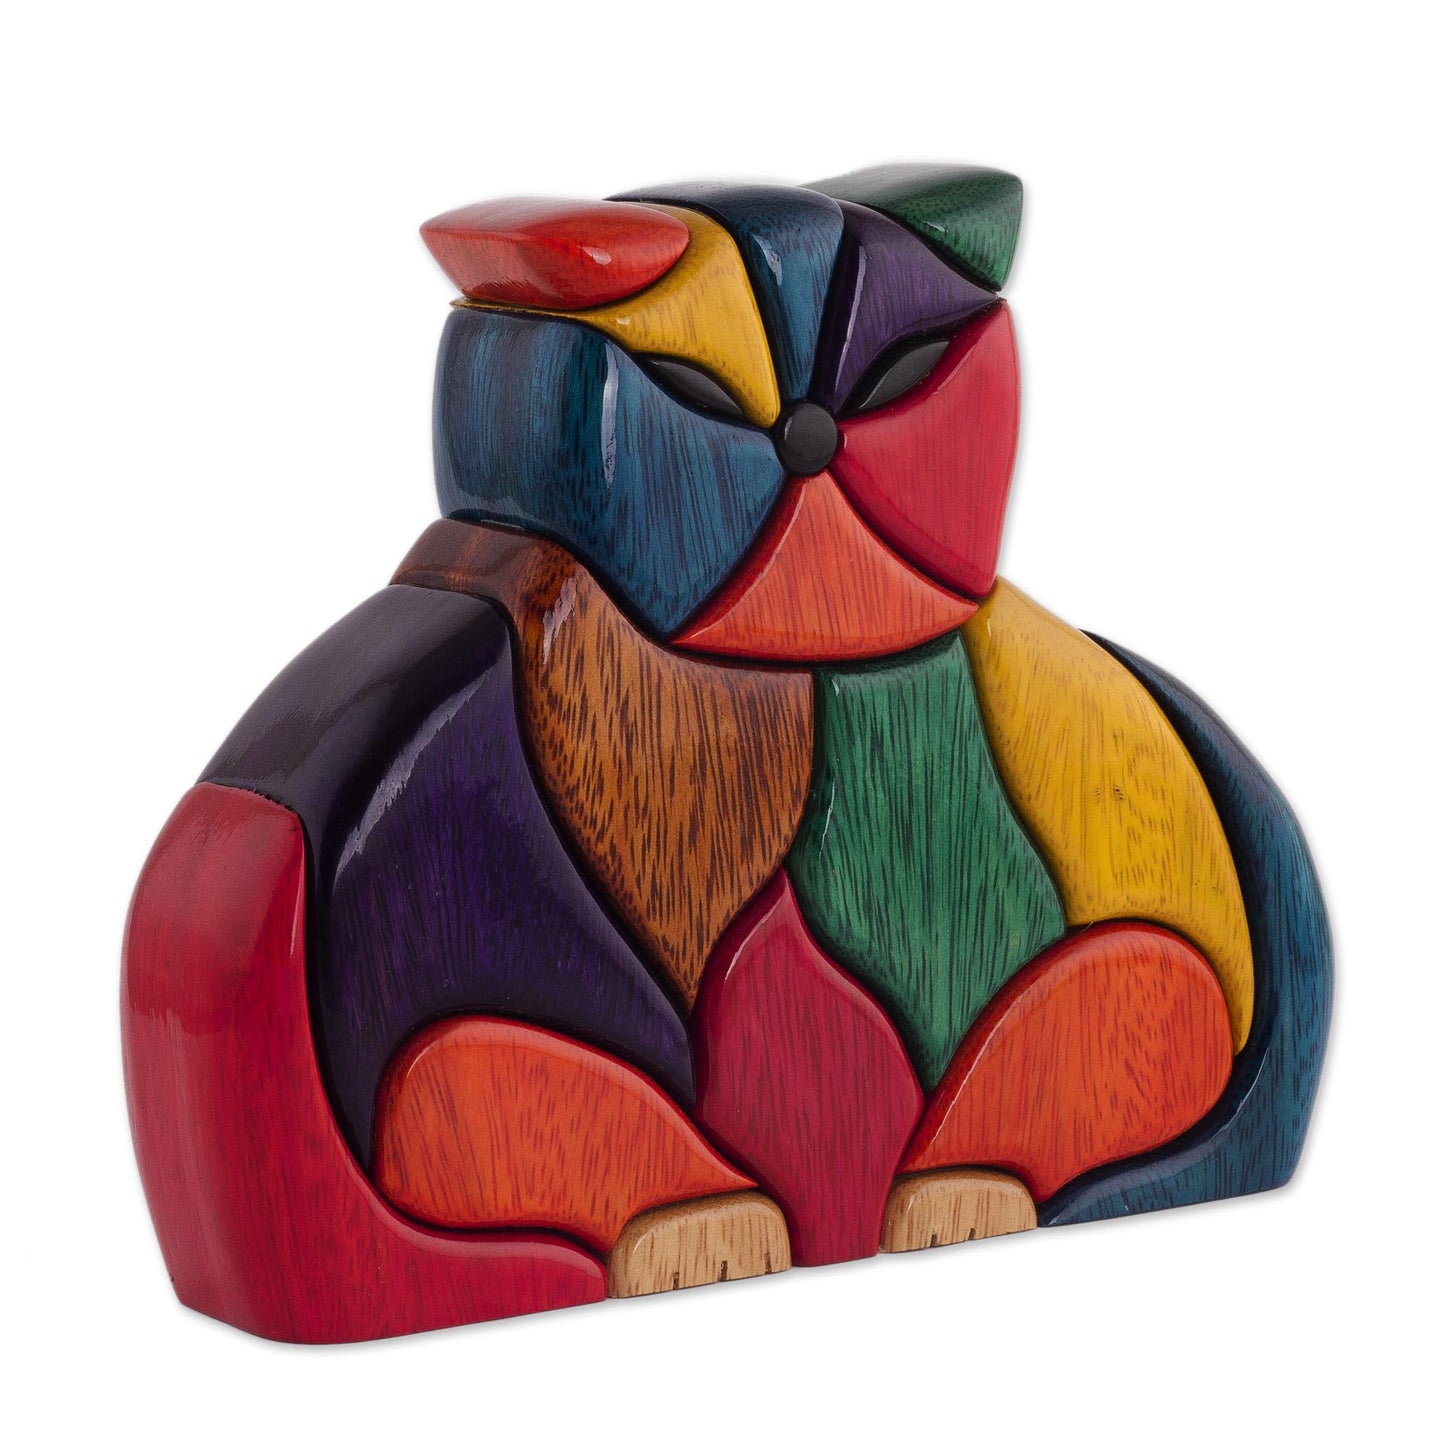 Patchwork Cat Multicolor Ishpingo Wood Sculpture